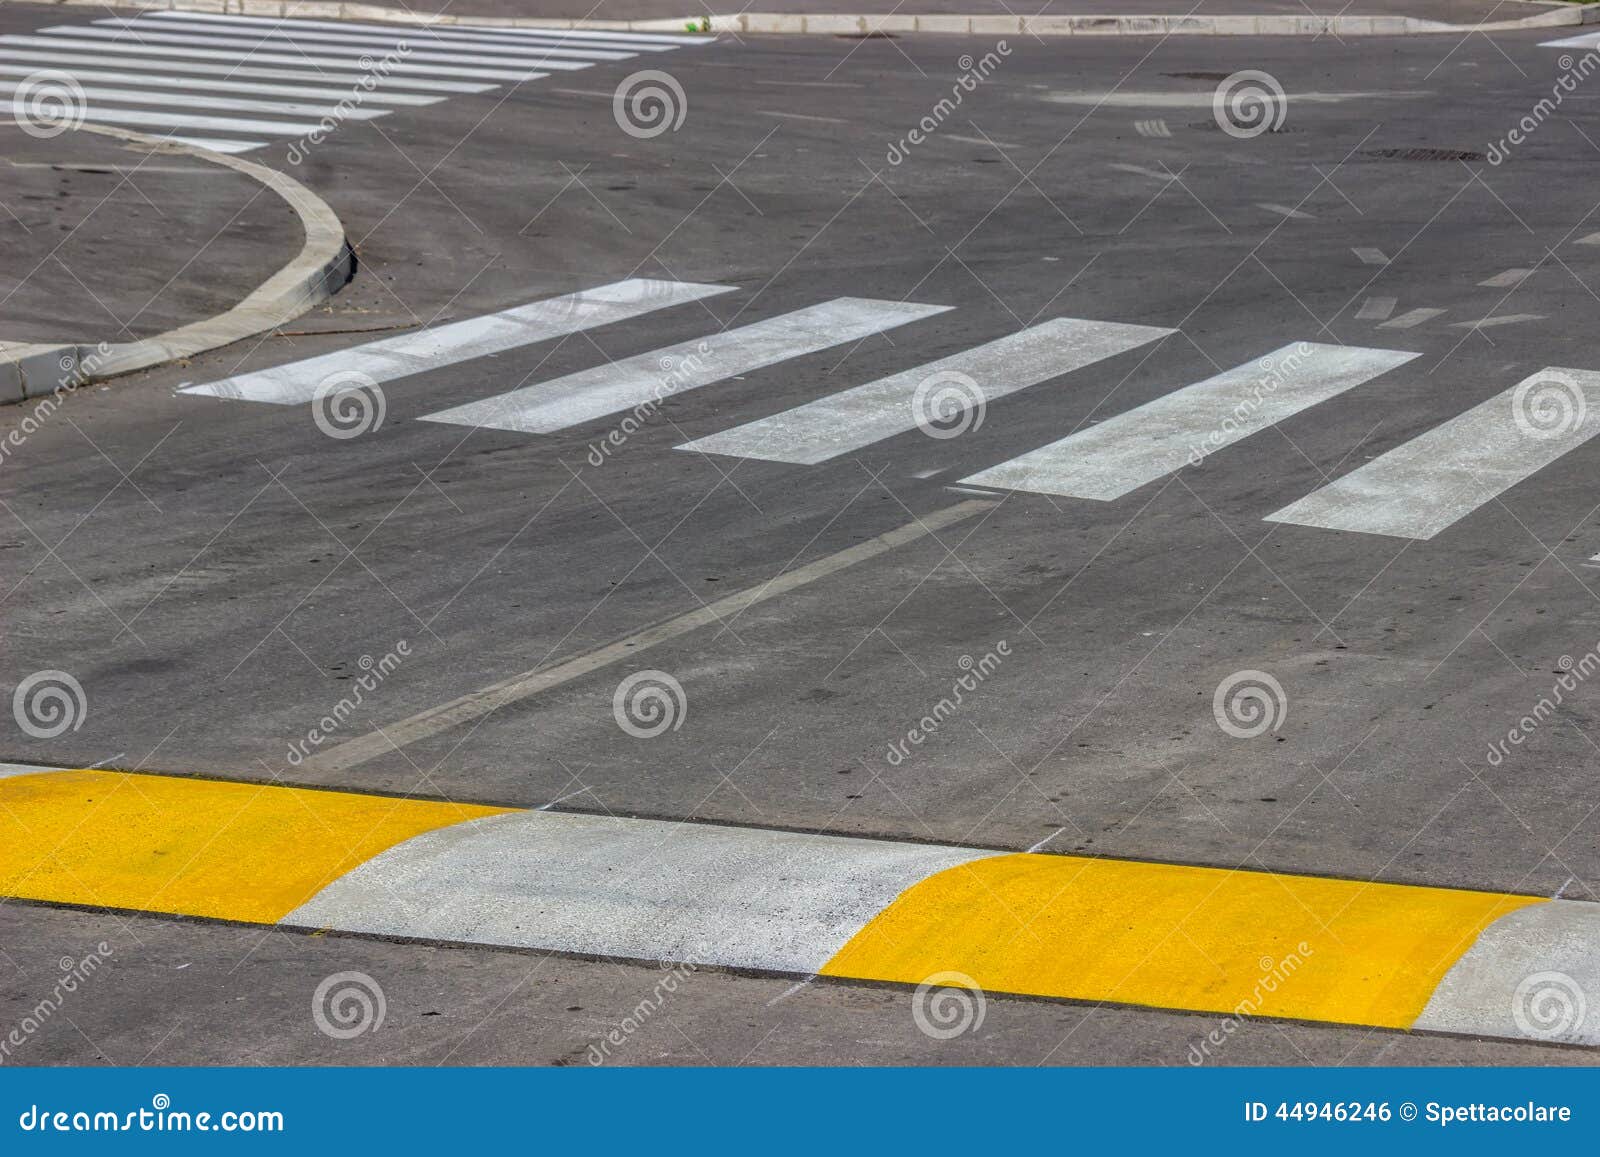 Freshly Painted Crosswalk And Speed Bump Stock Photo - Image: 44946246